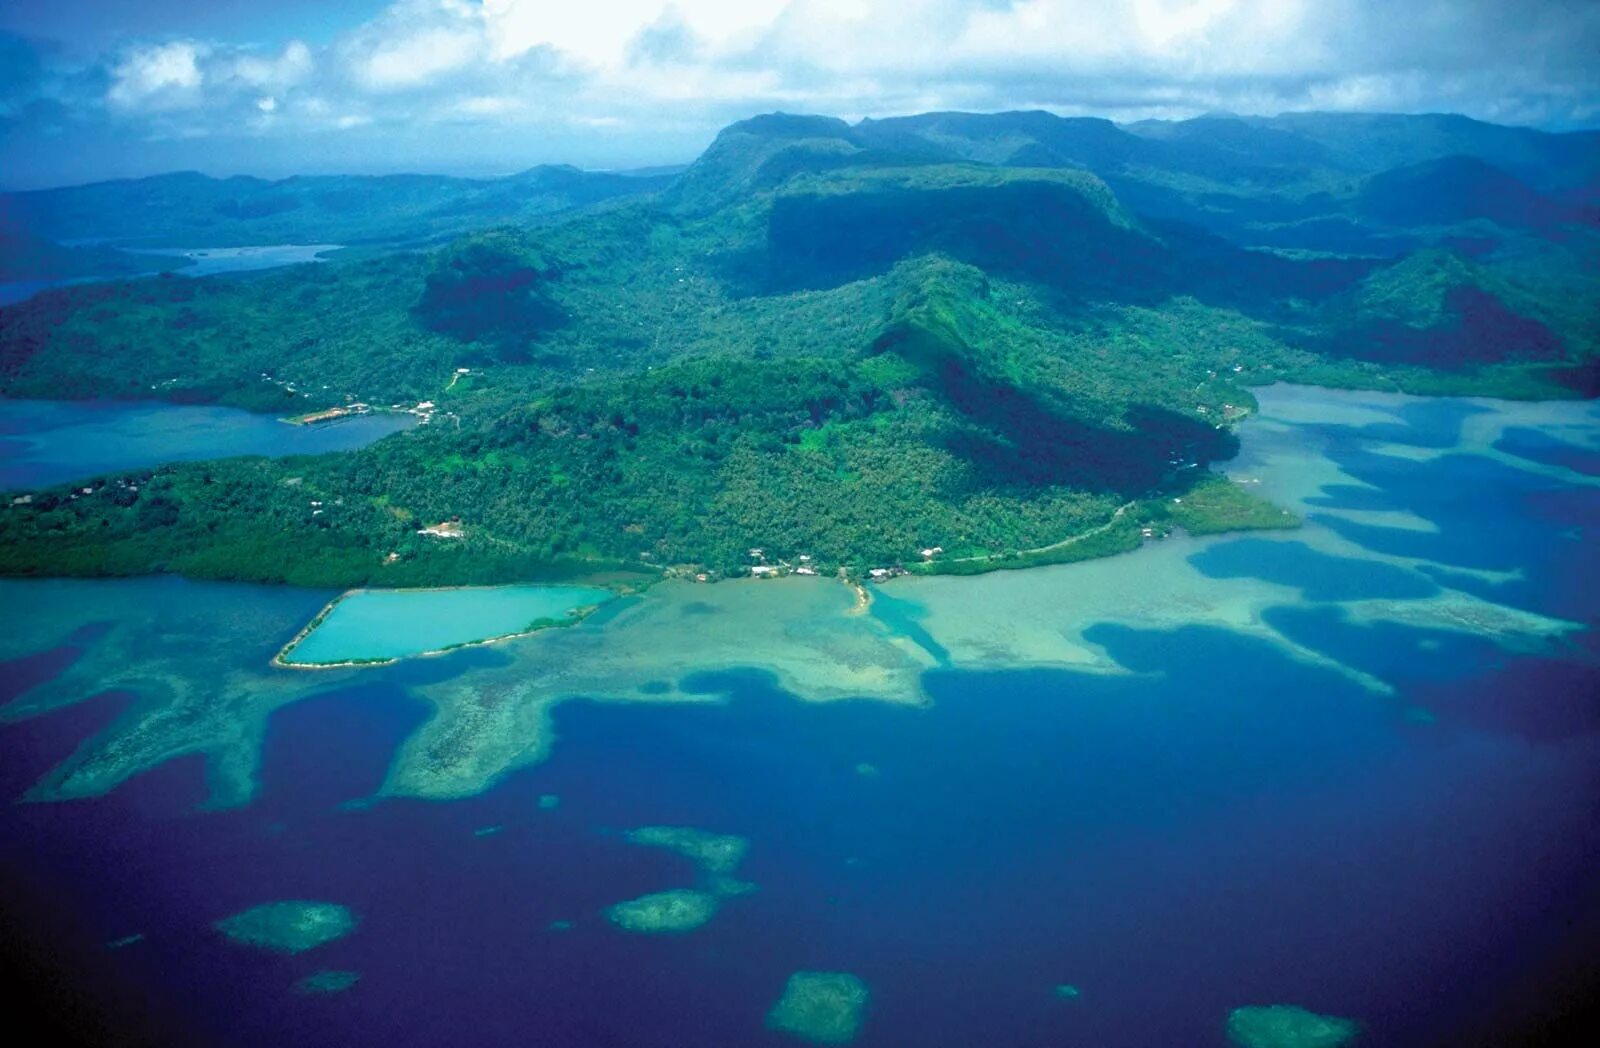 Столица микронезии. Федеративные штаты Микронезии Паликир. Нан-Мадол федеративные штаты Микронезии. Понпеи Микронезия. Остров Понпеи в Микронезии.